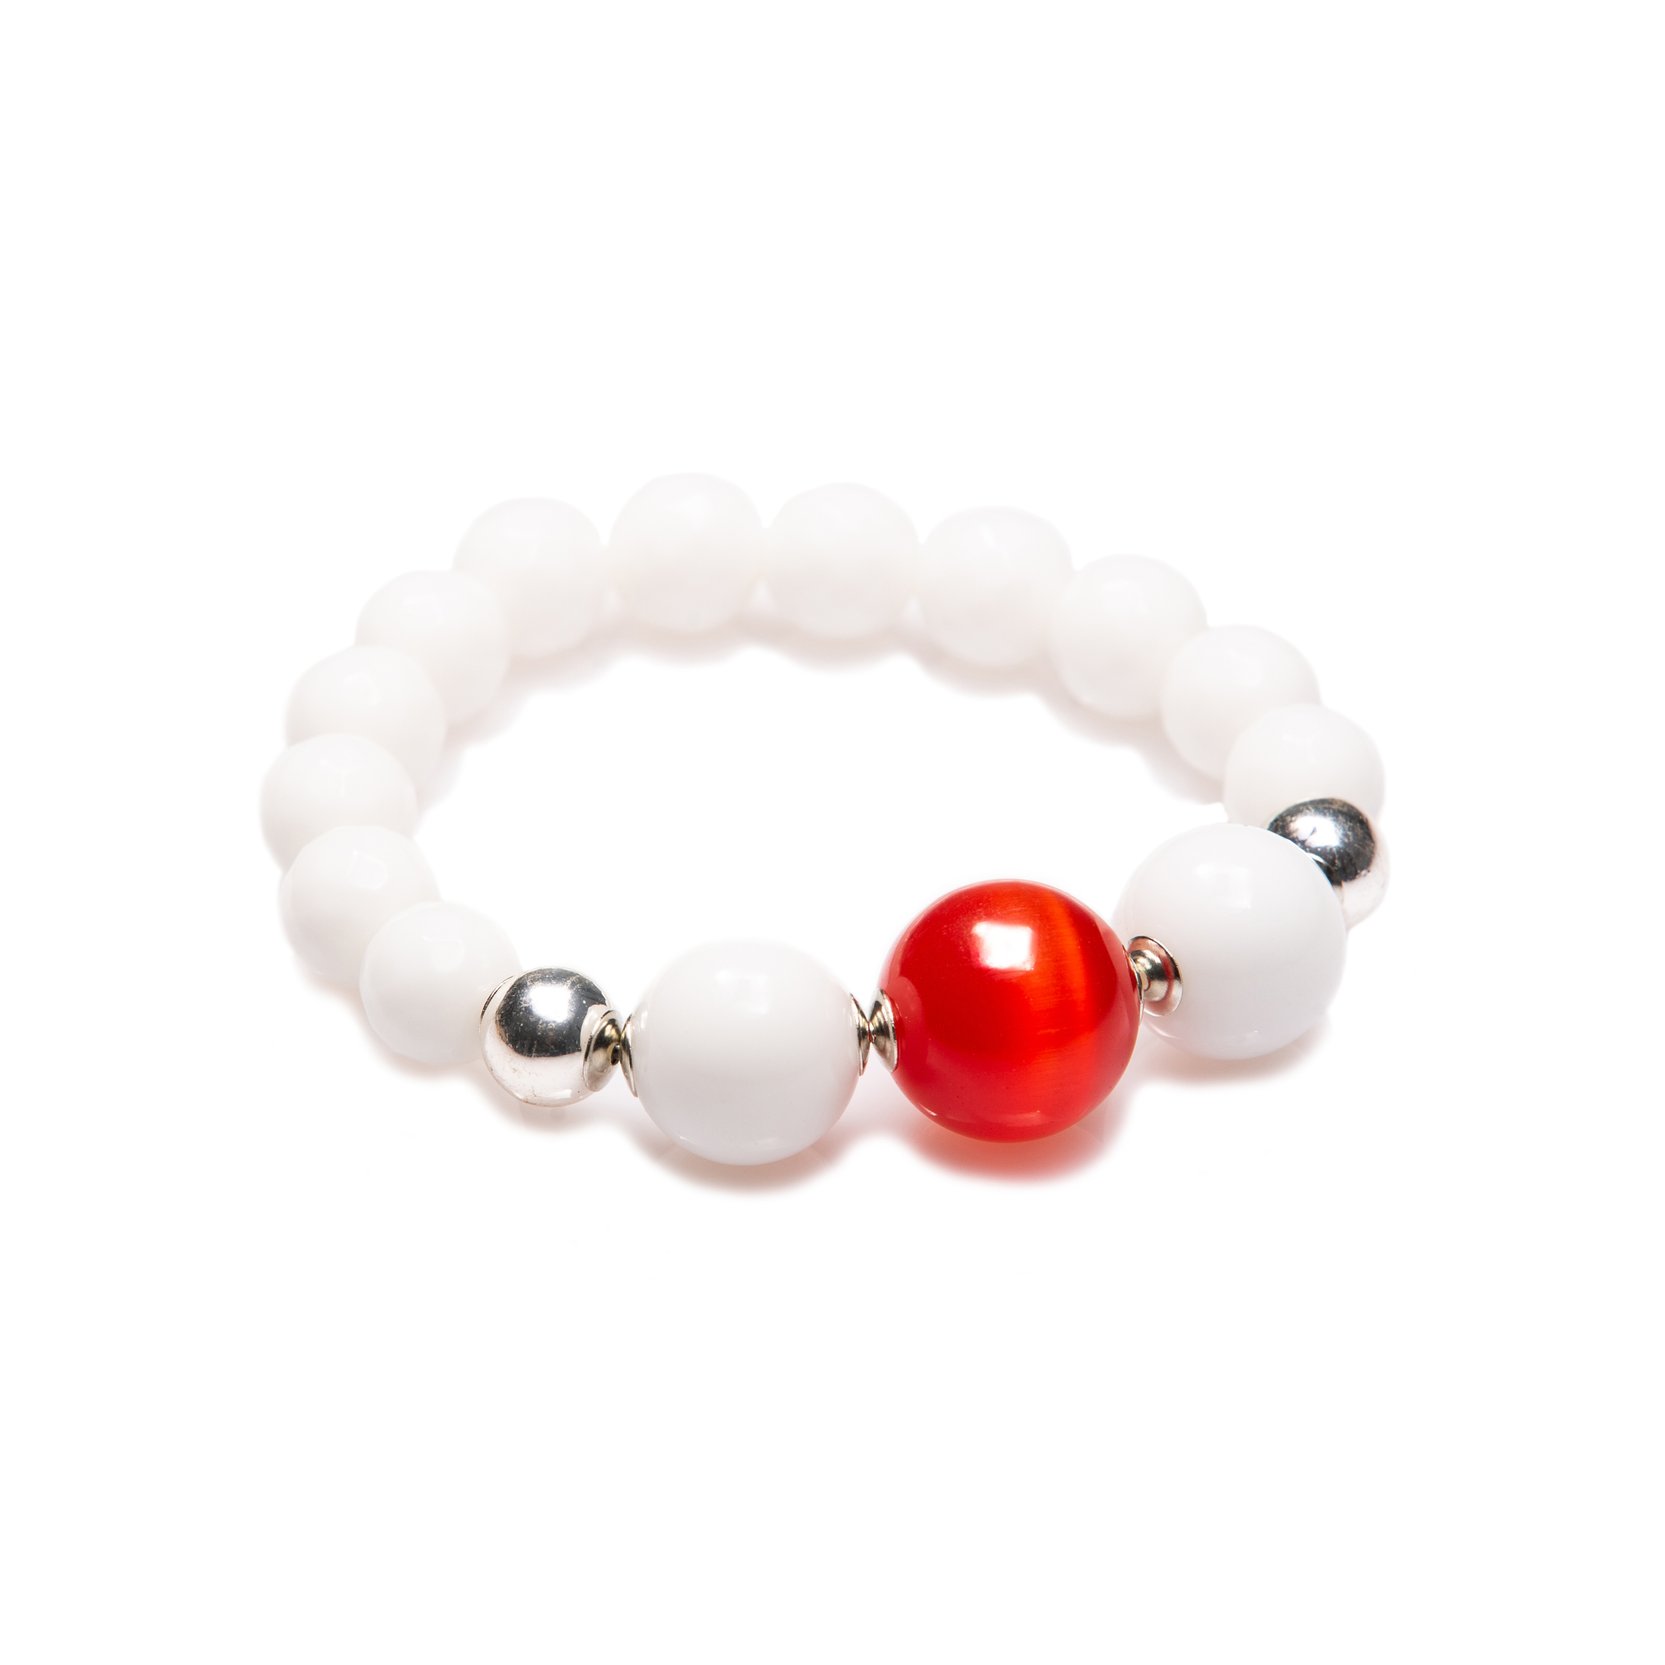 Elegant bracelet with white agates and a bright orange stone.